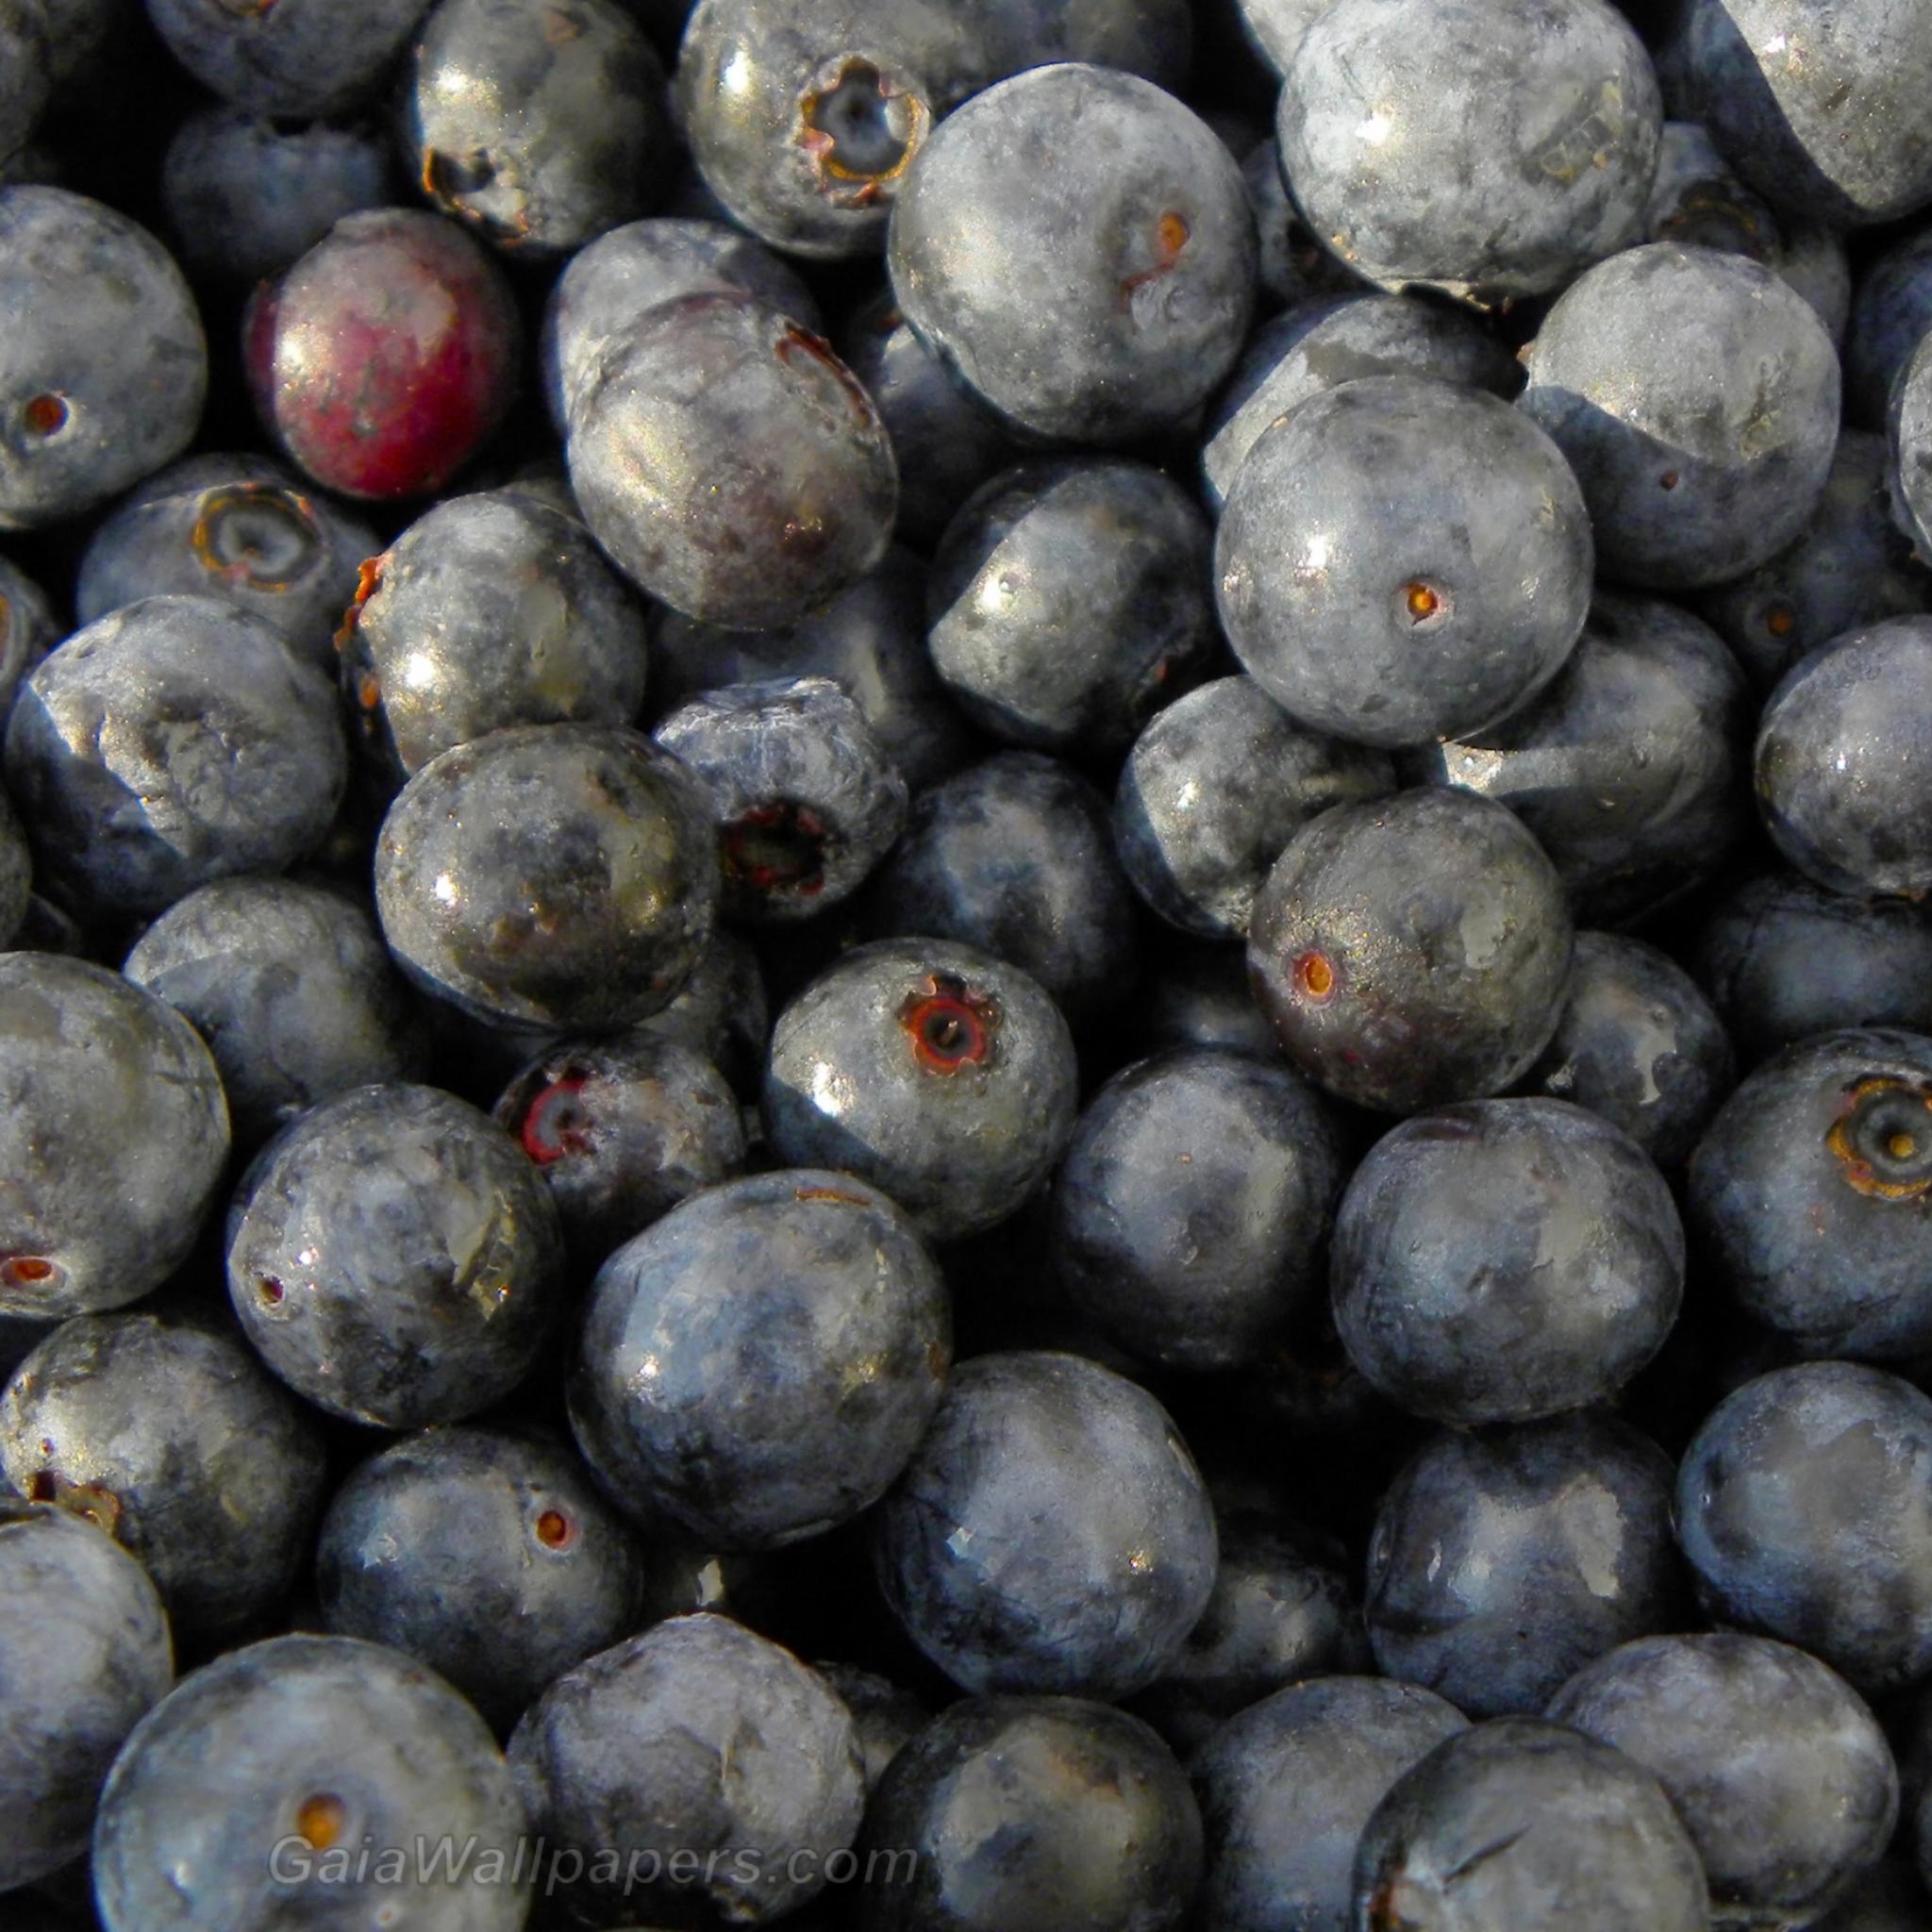 Delicious blueberries - Free desktop wallpapers